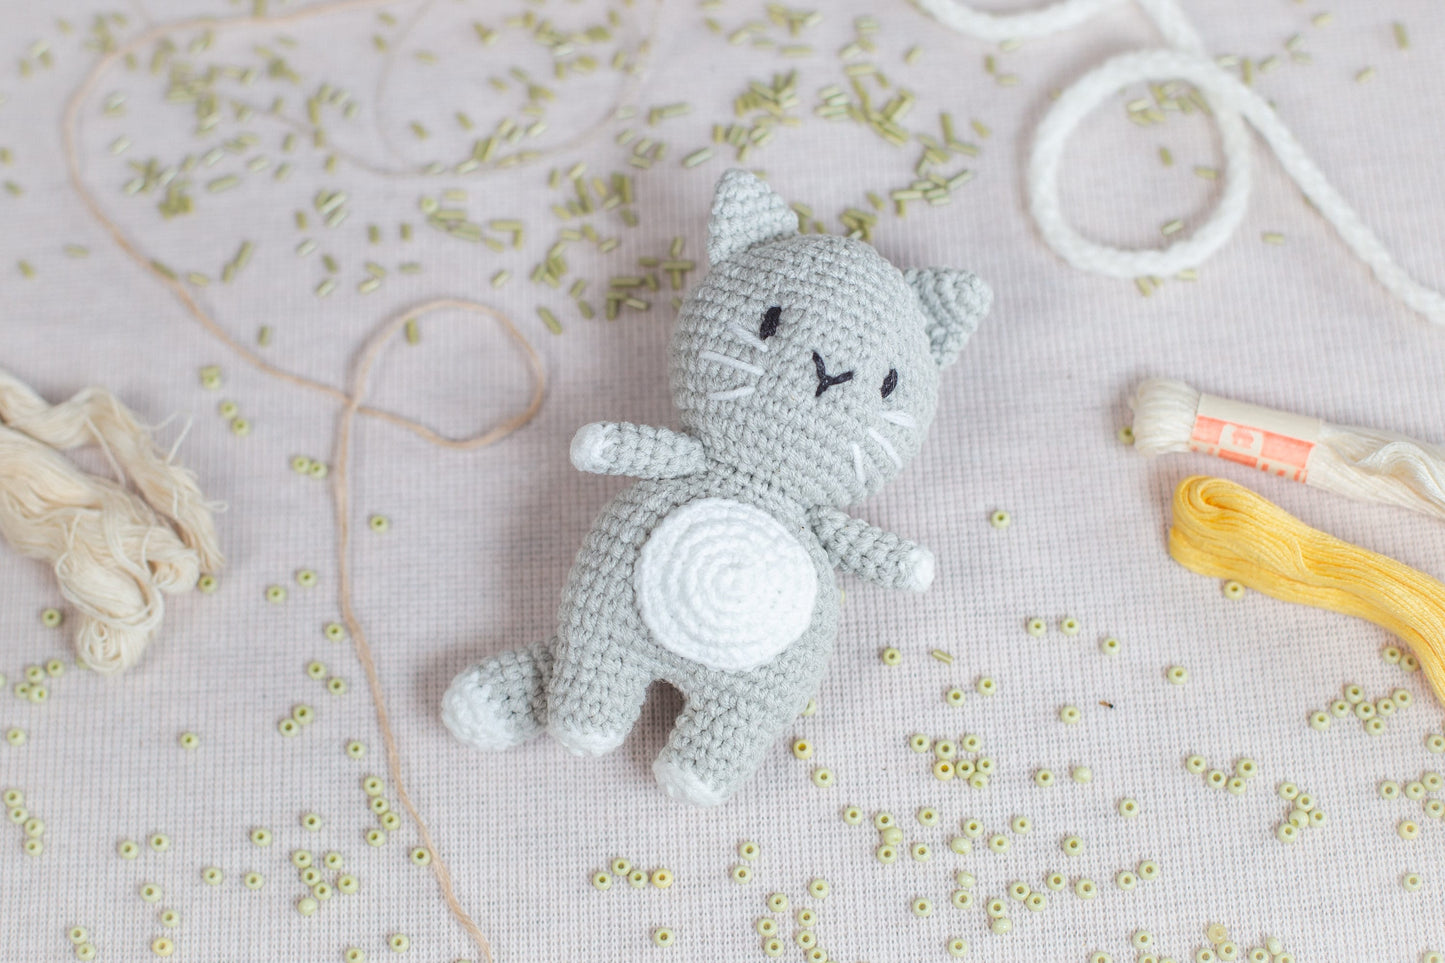 Crochet Kit for Adults Cat, Beginner Crochet Kit, Animal Amigurumi DIY Craft Kit